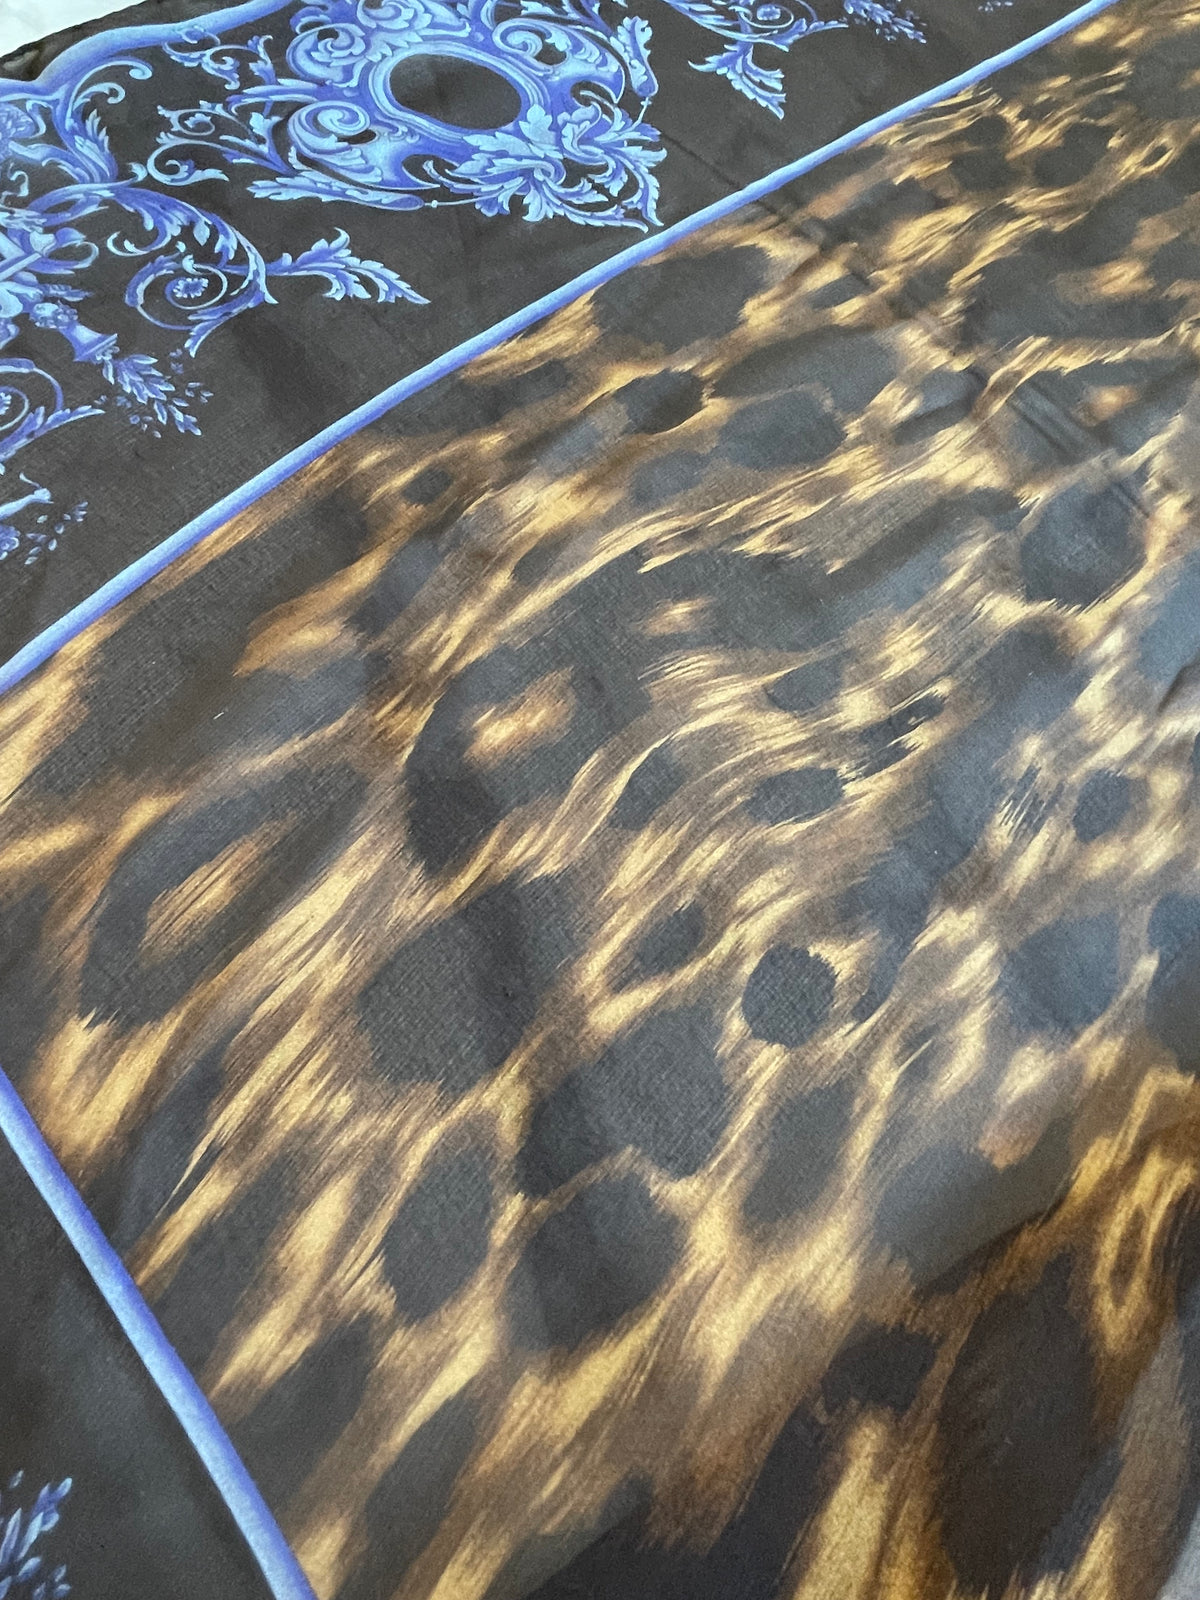 VERSACE Leopard Print Oblong Scarf